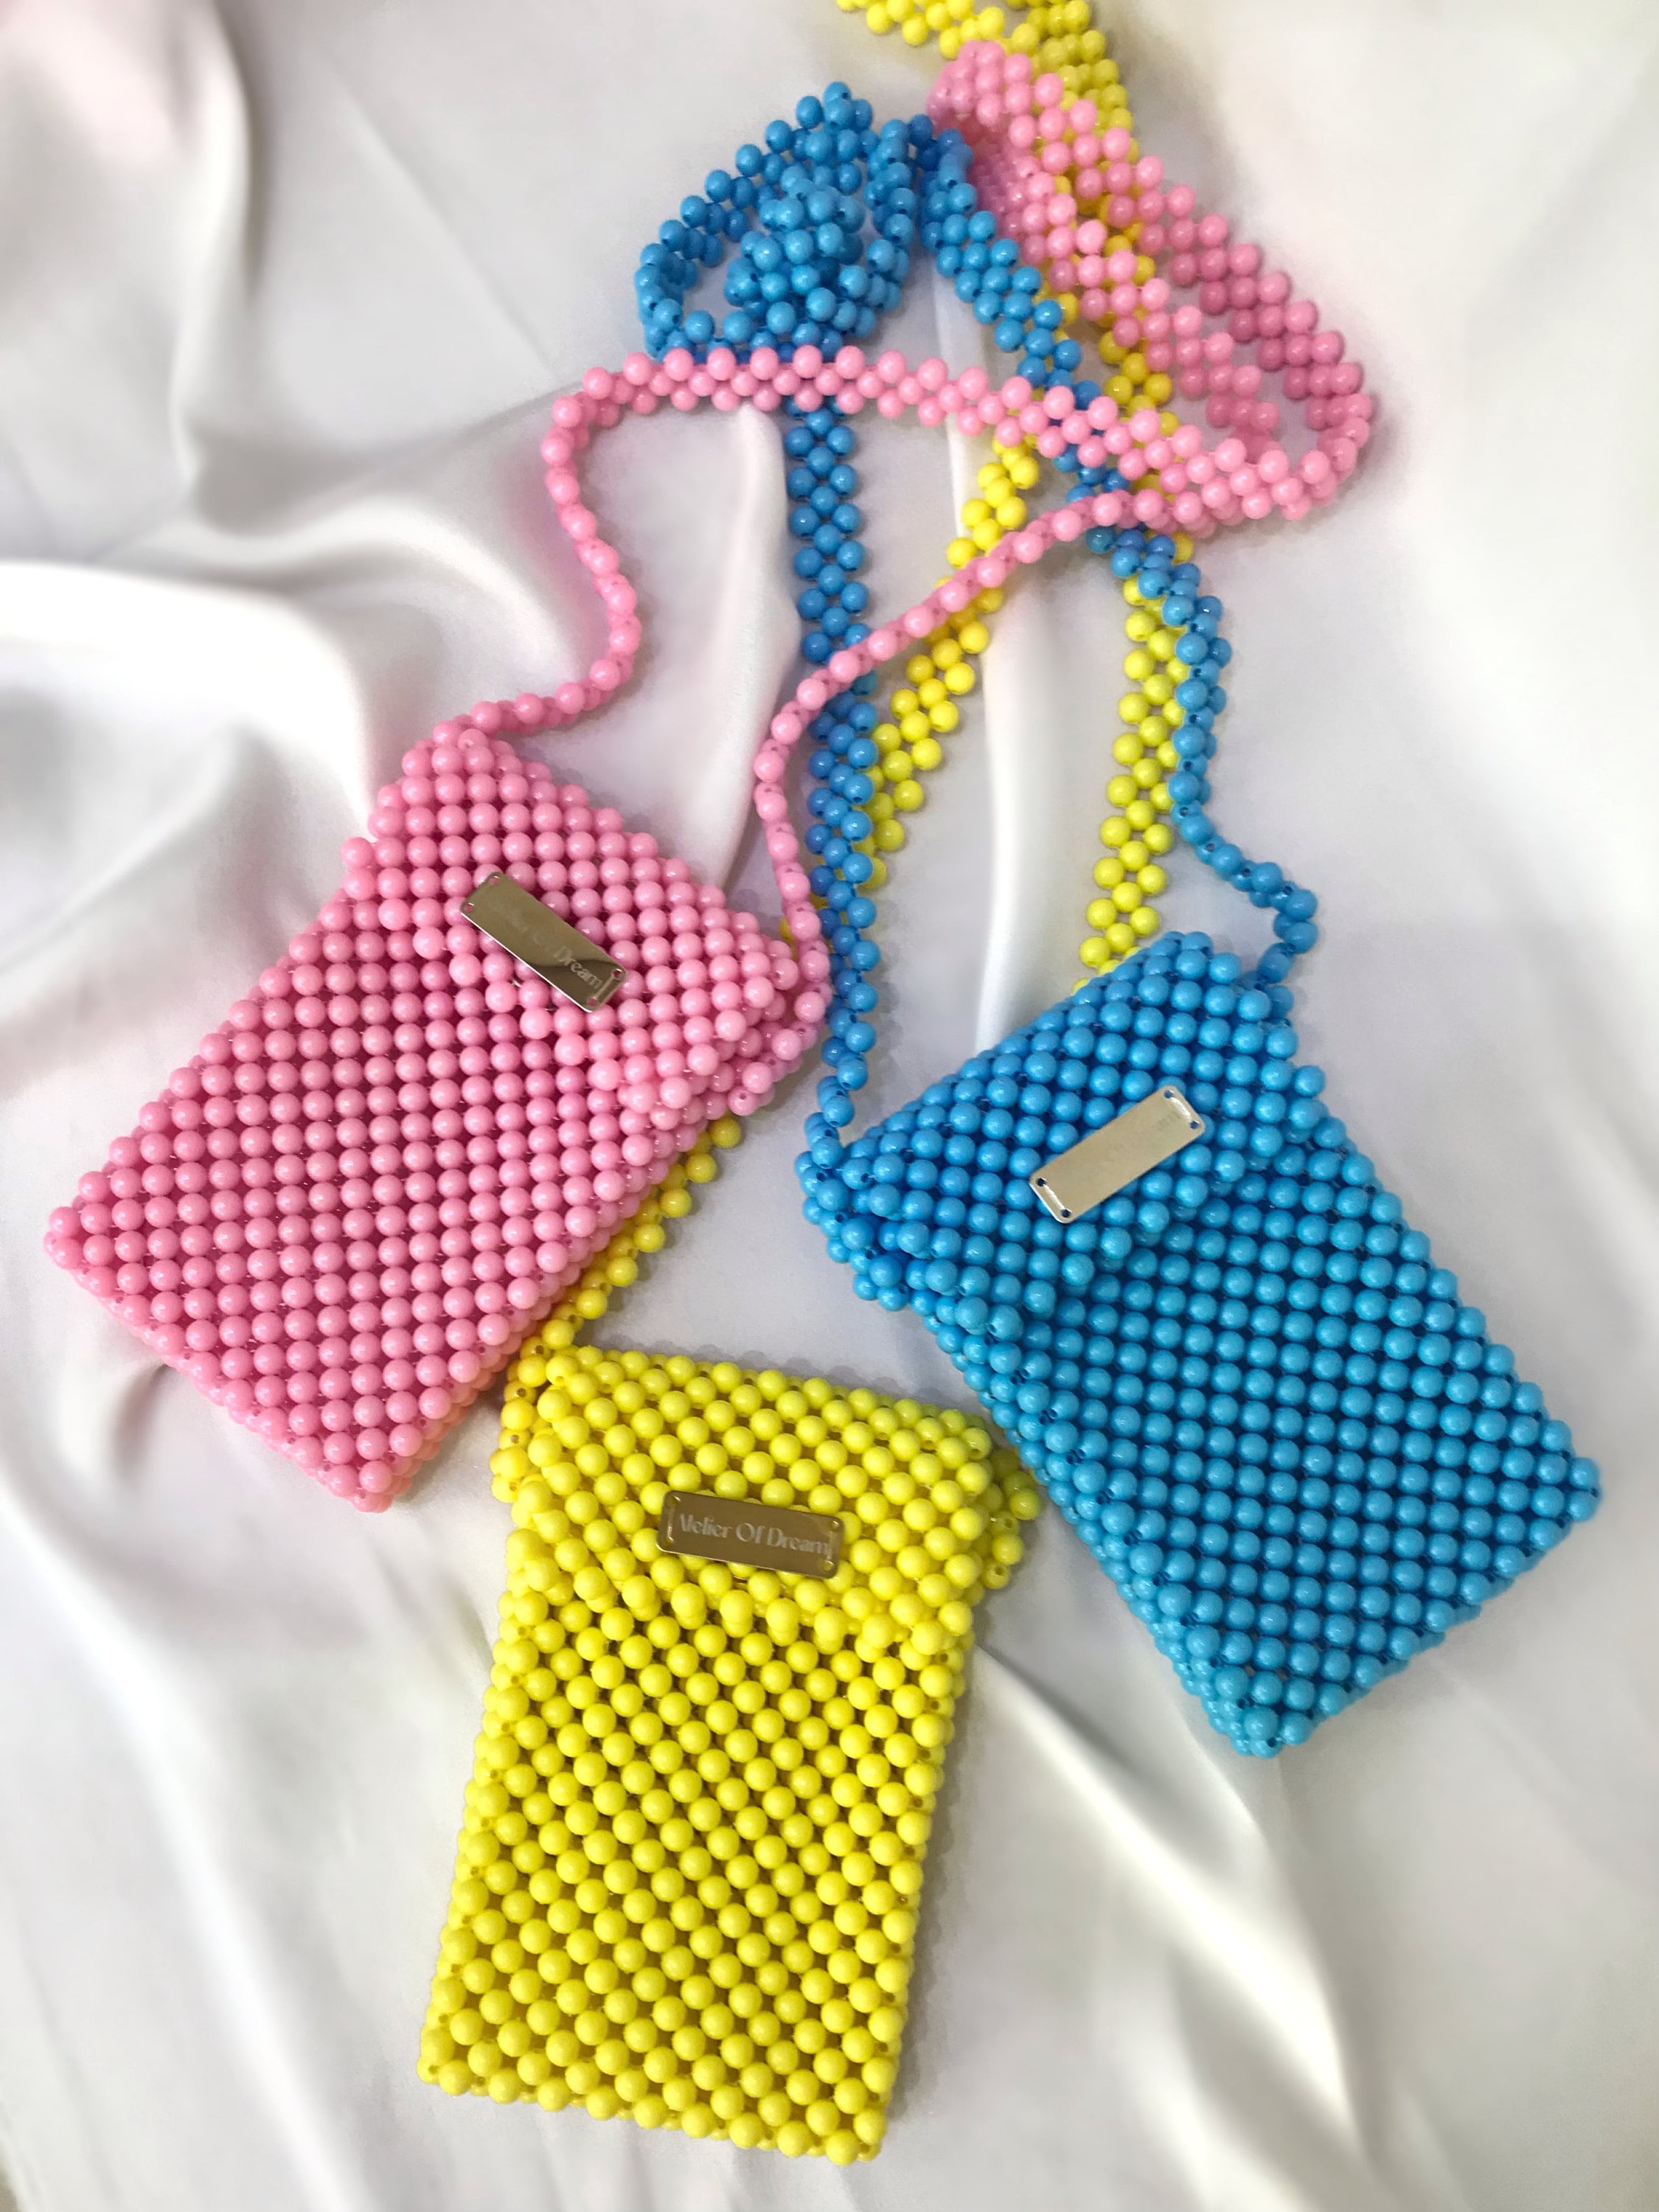 Beautiful Macrame Bag Tutorial | DIY Macrame Bag New Design - YouTube